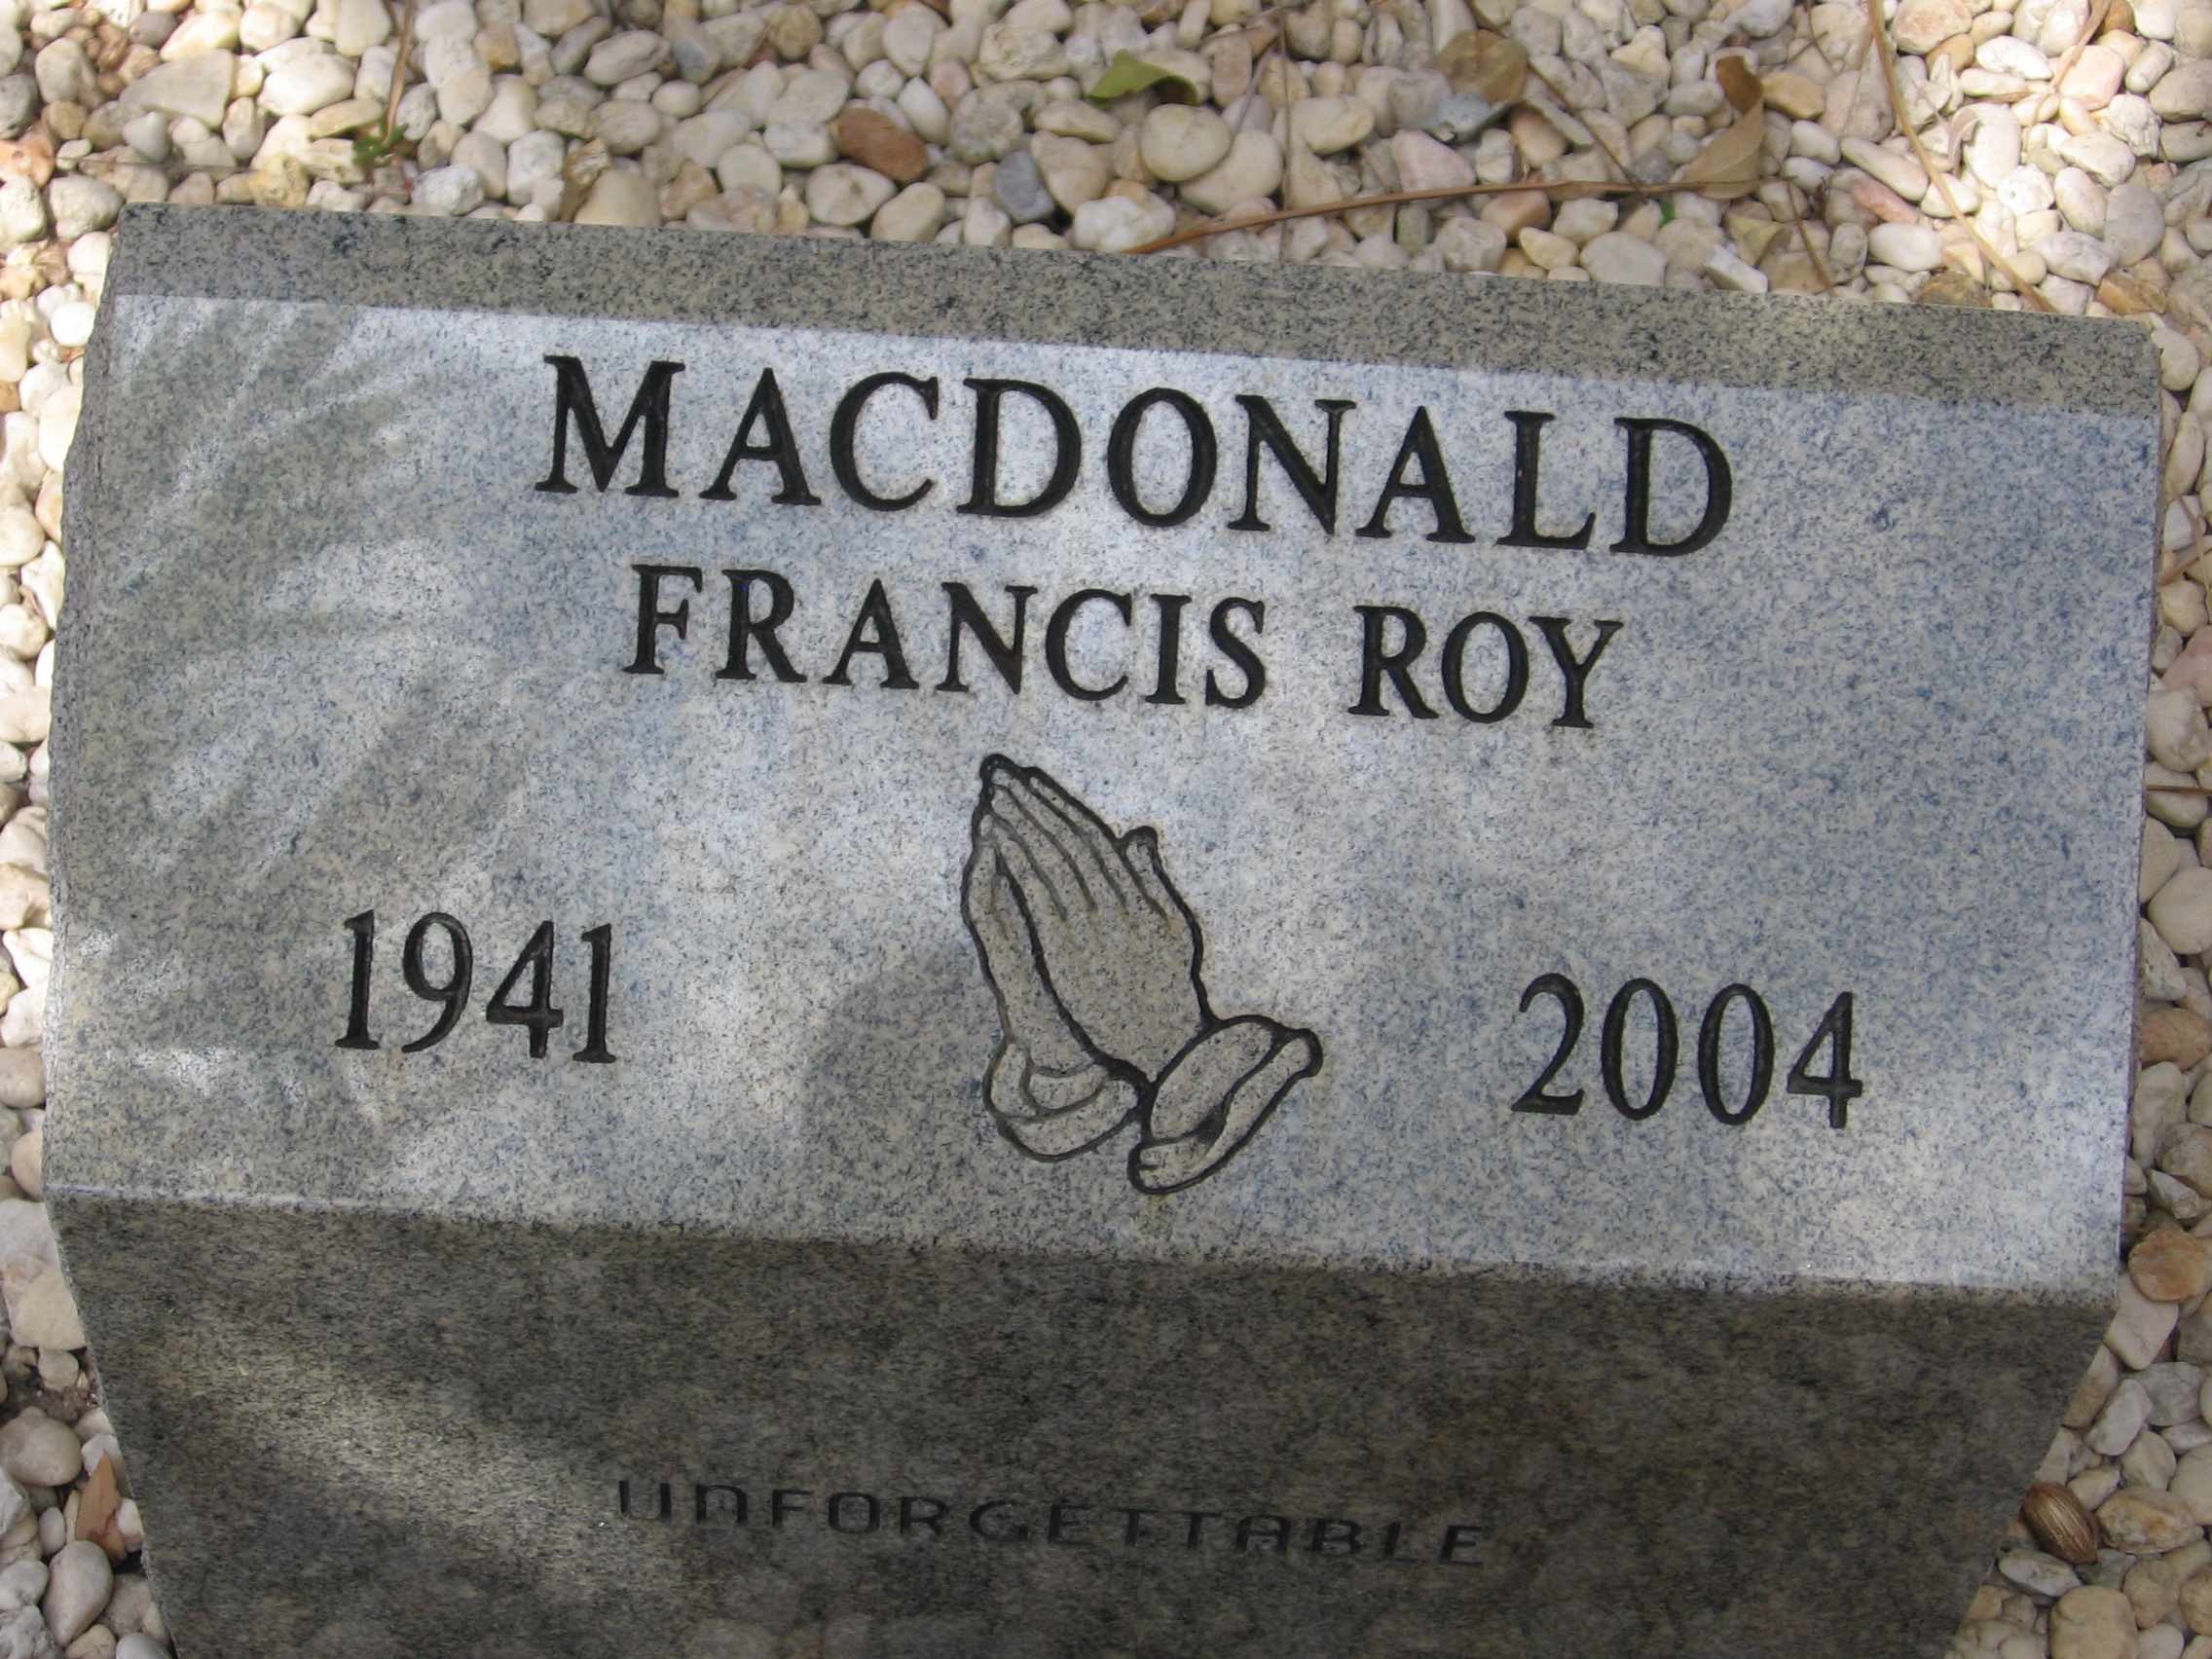 Francis Roy MacDonald